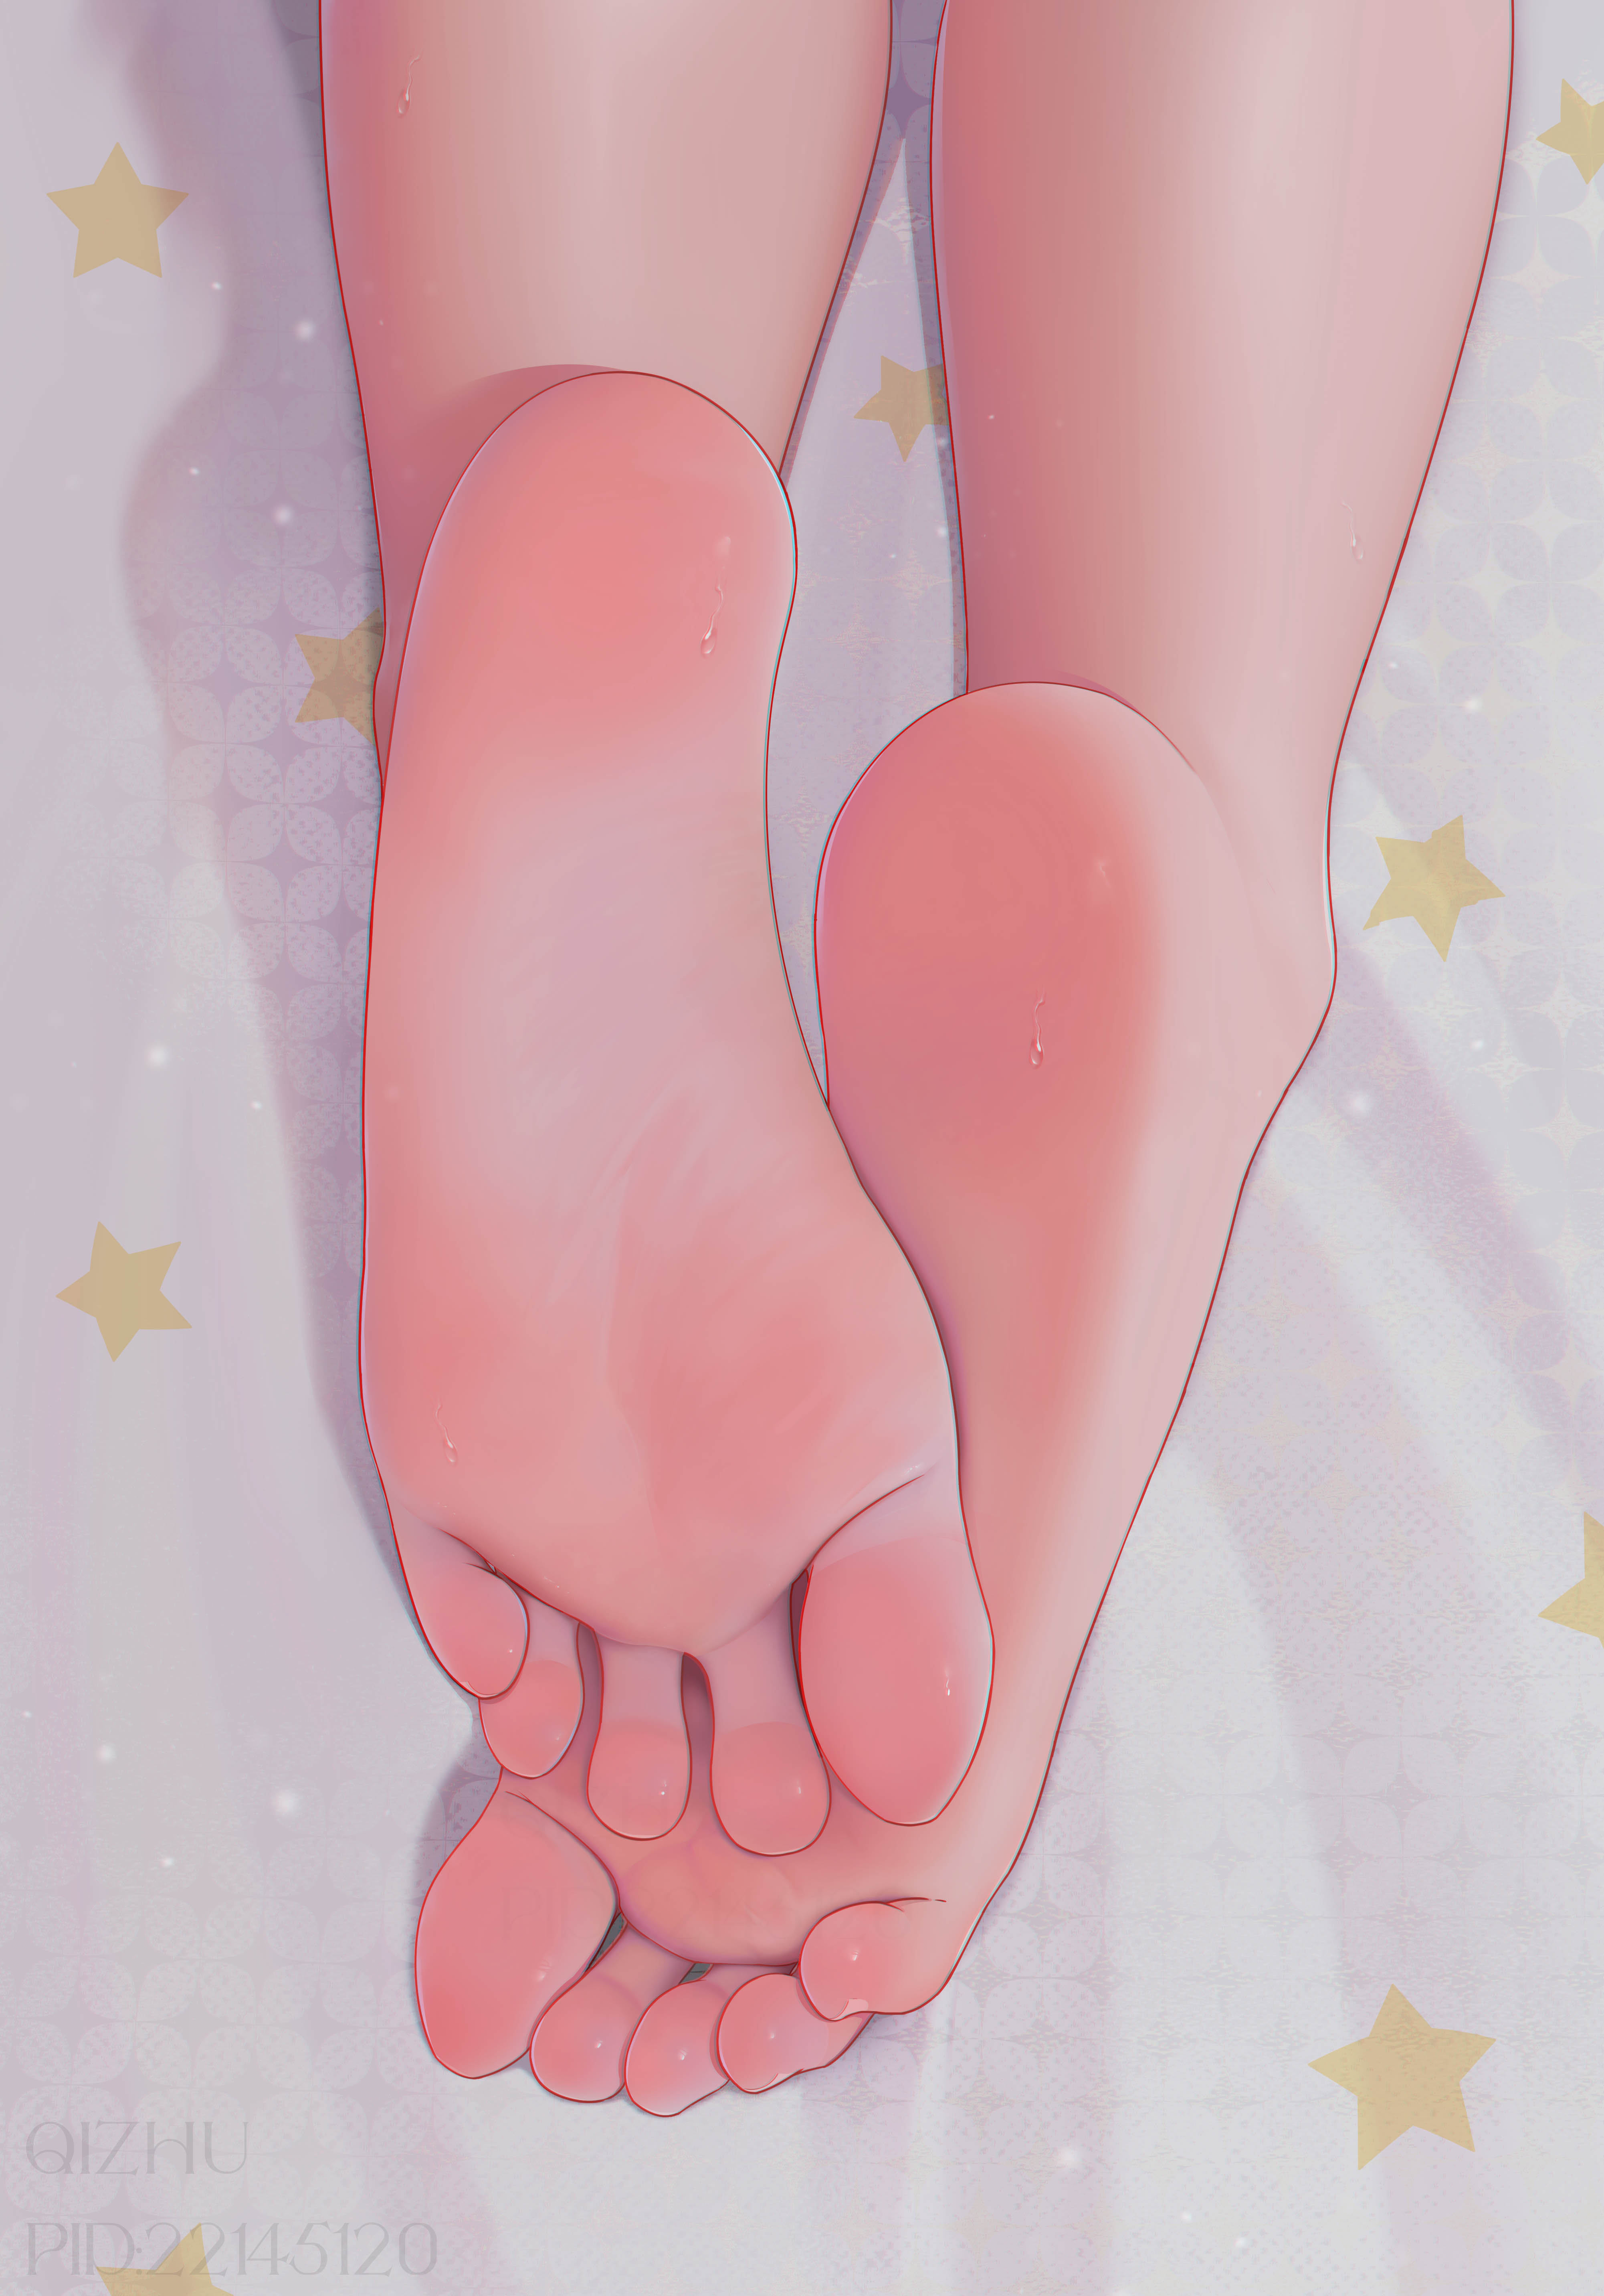 Qizhu Anime Girls Feet Foot Sole 4002x5728